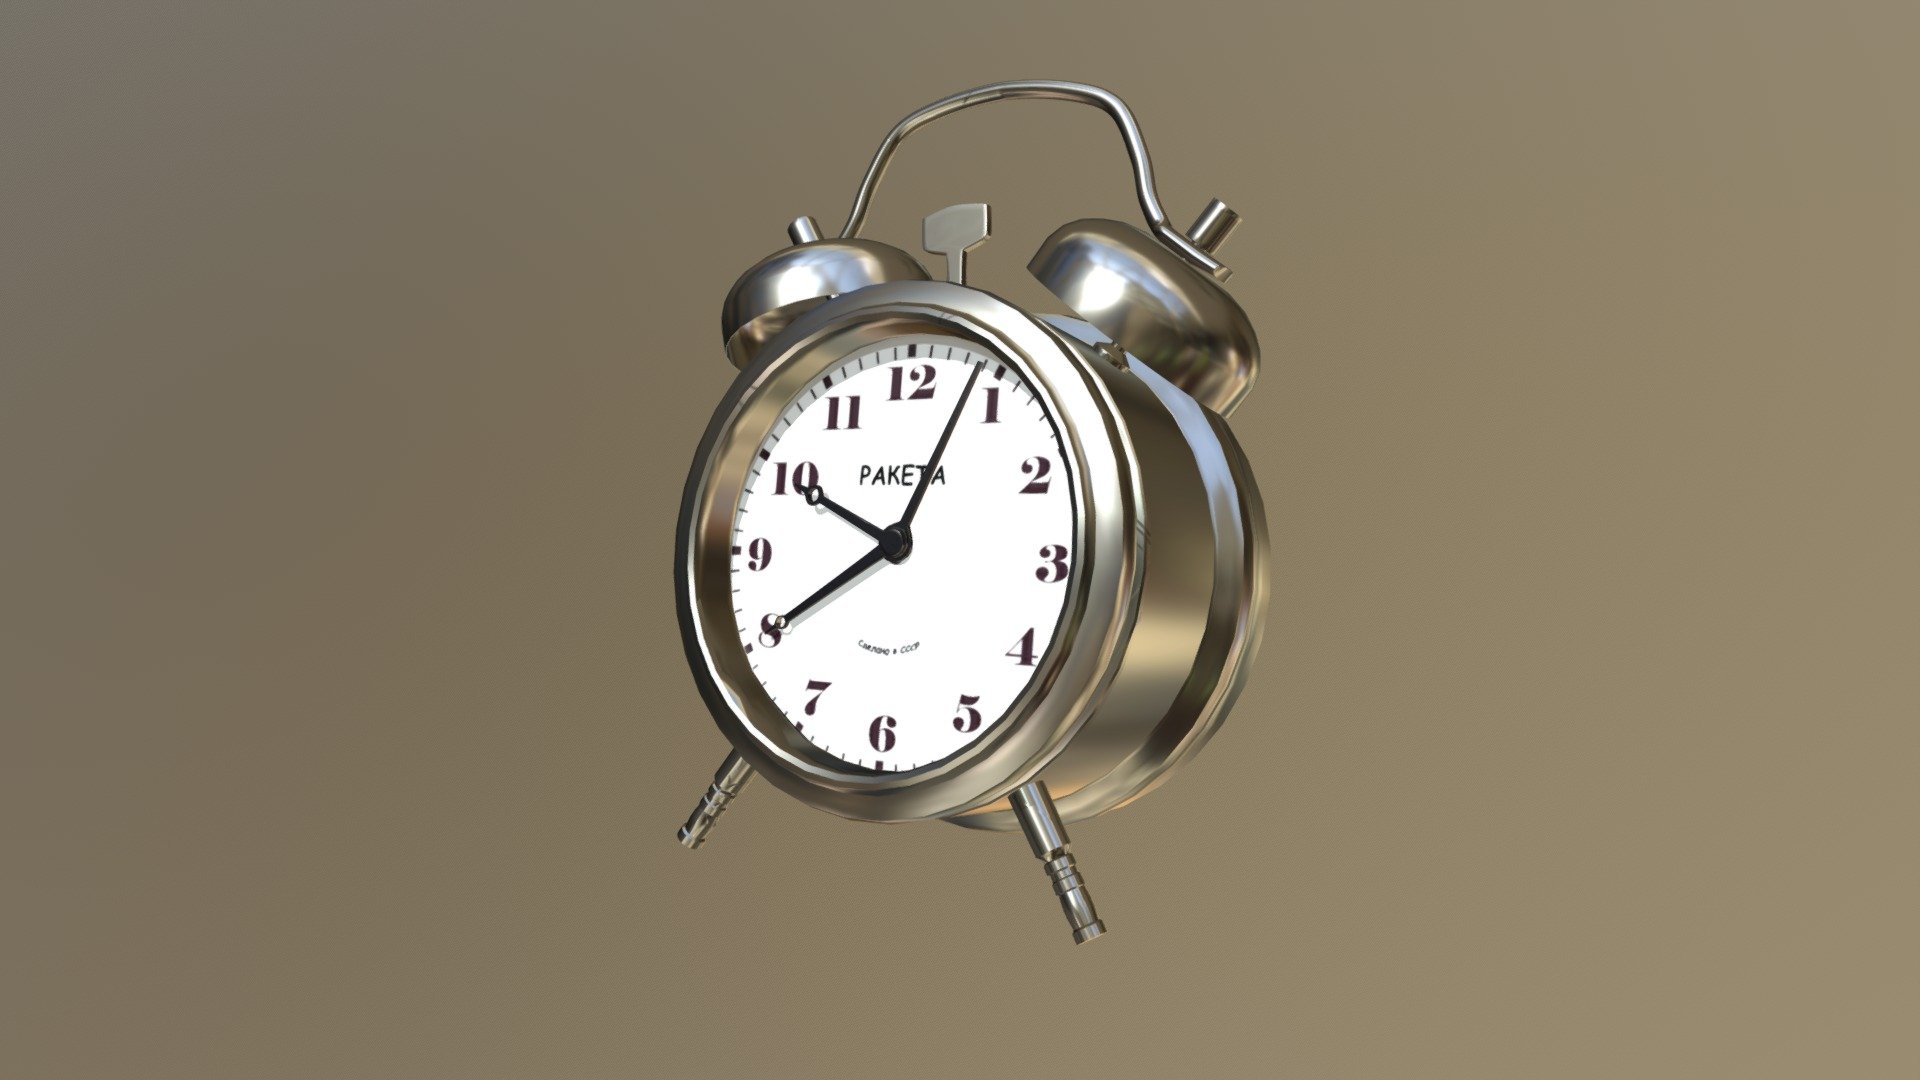 This is old school alarm clock in USSR style &ldquo;Raketa